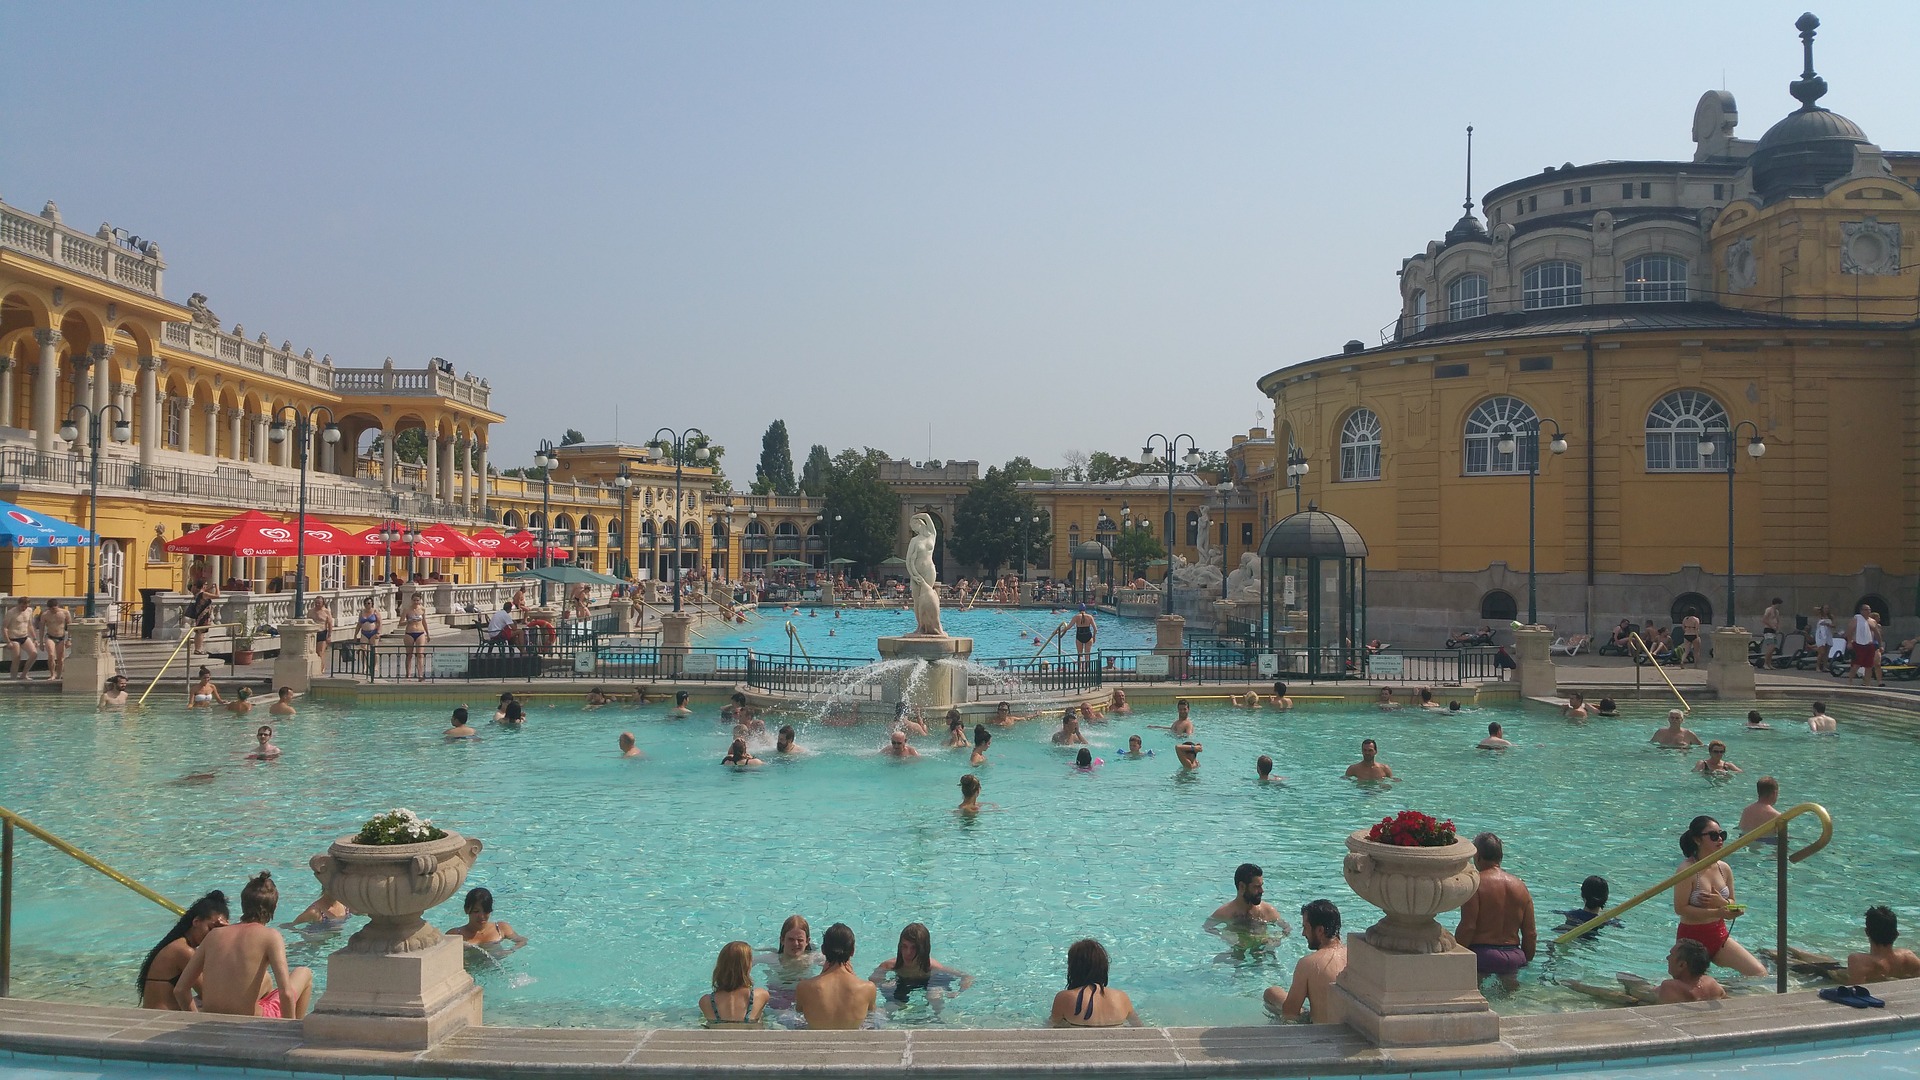 Szechenyi Baths, Budapest, Hungary